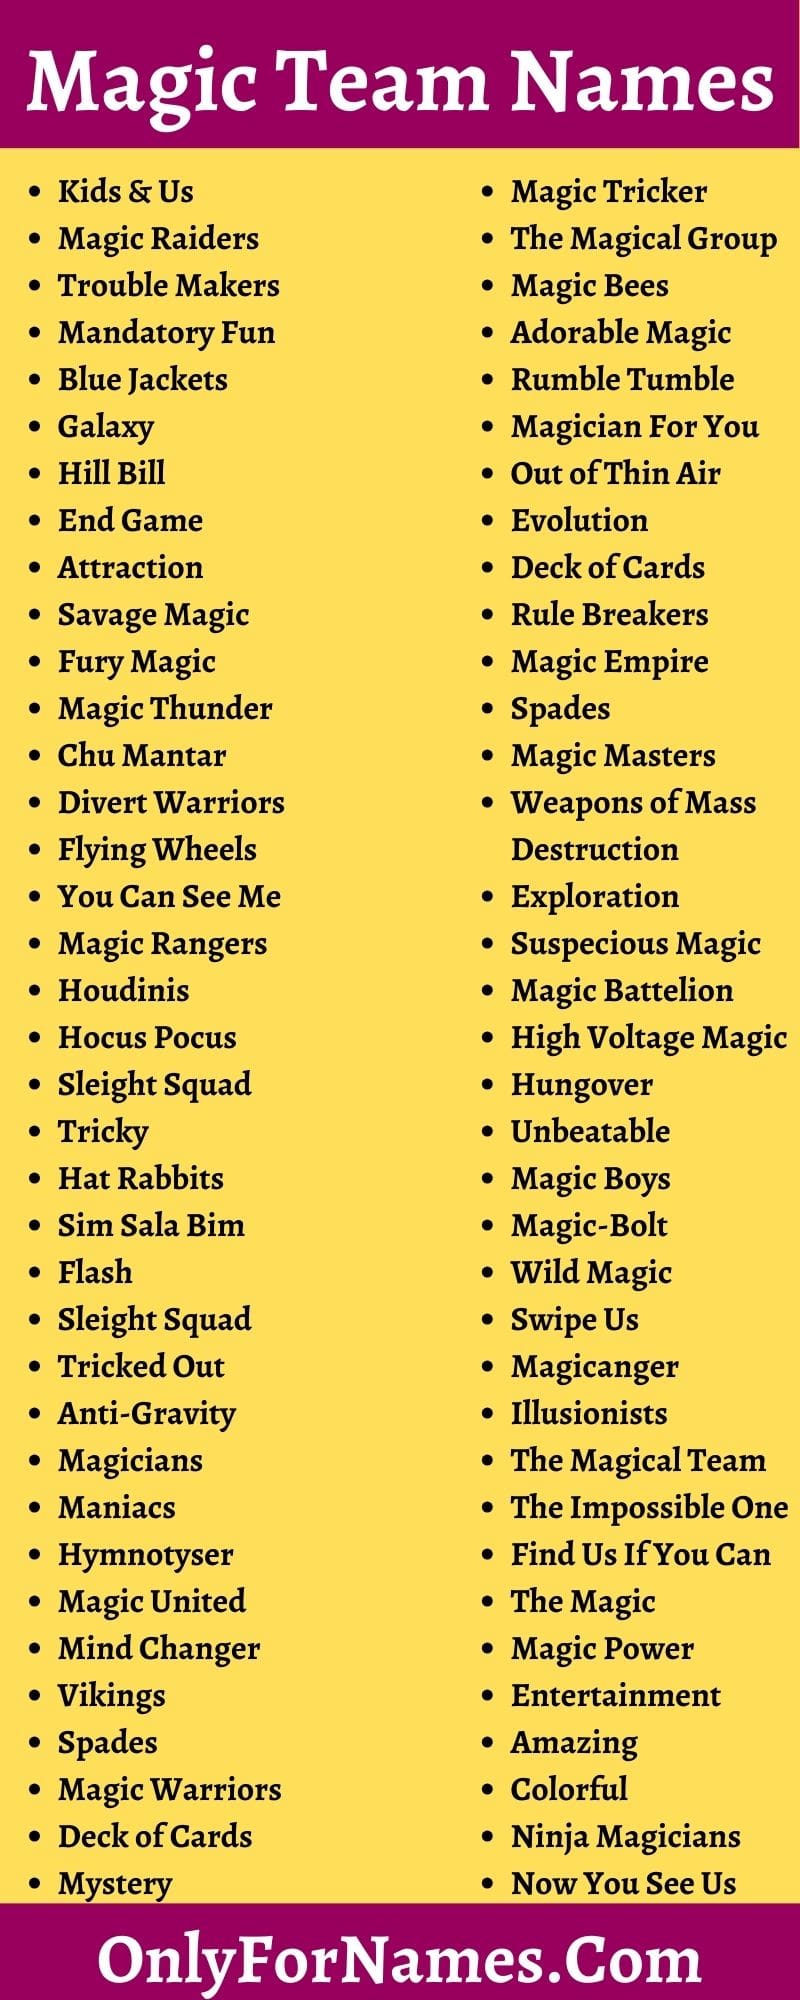 Magic Team Names